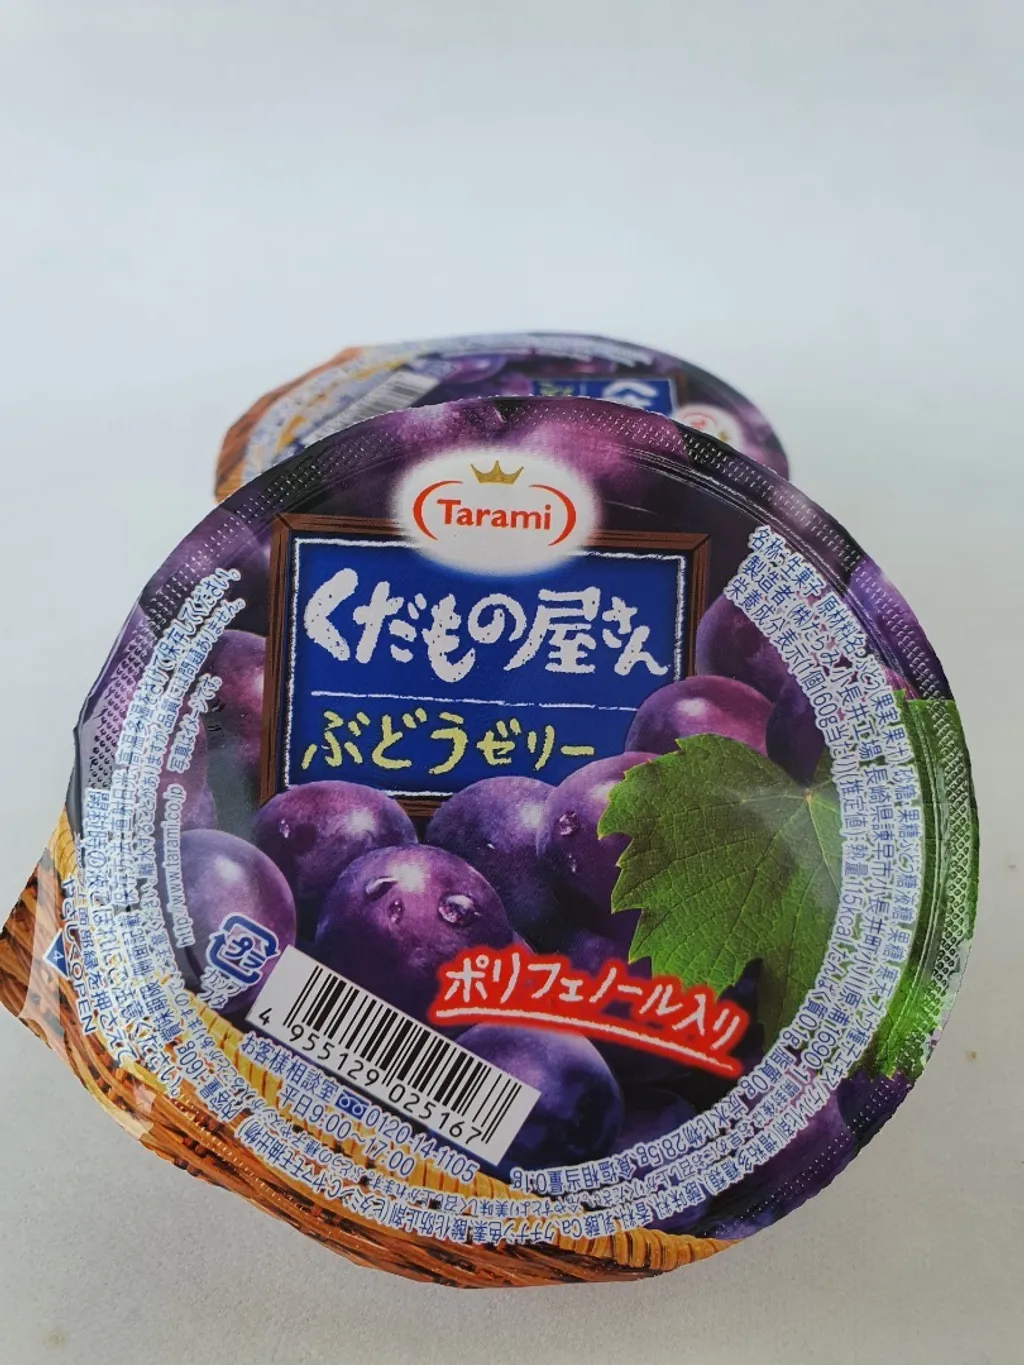 Tarami Fruit Jelly Grape Five Brothers Fruits Empire